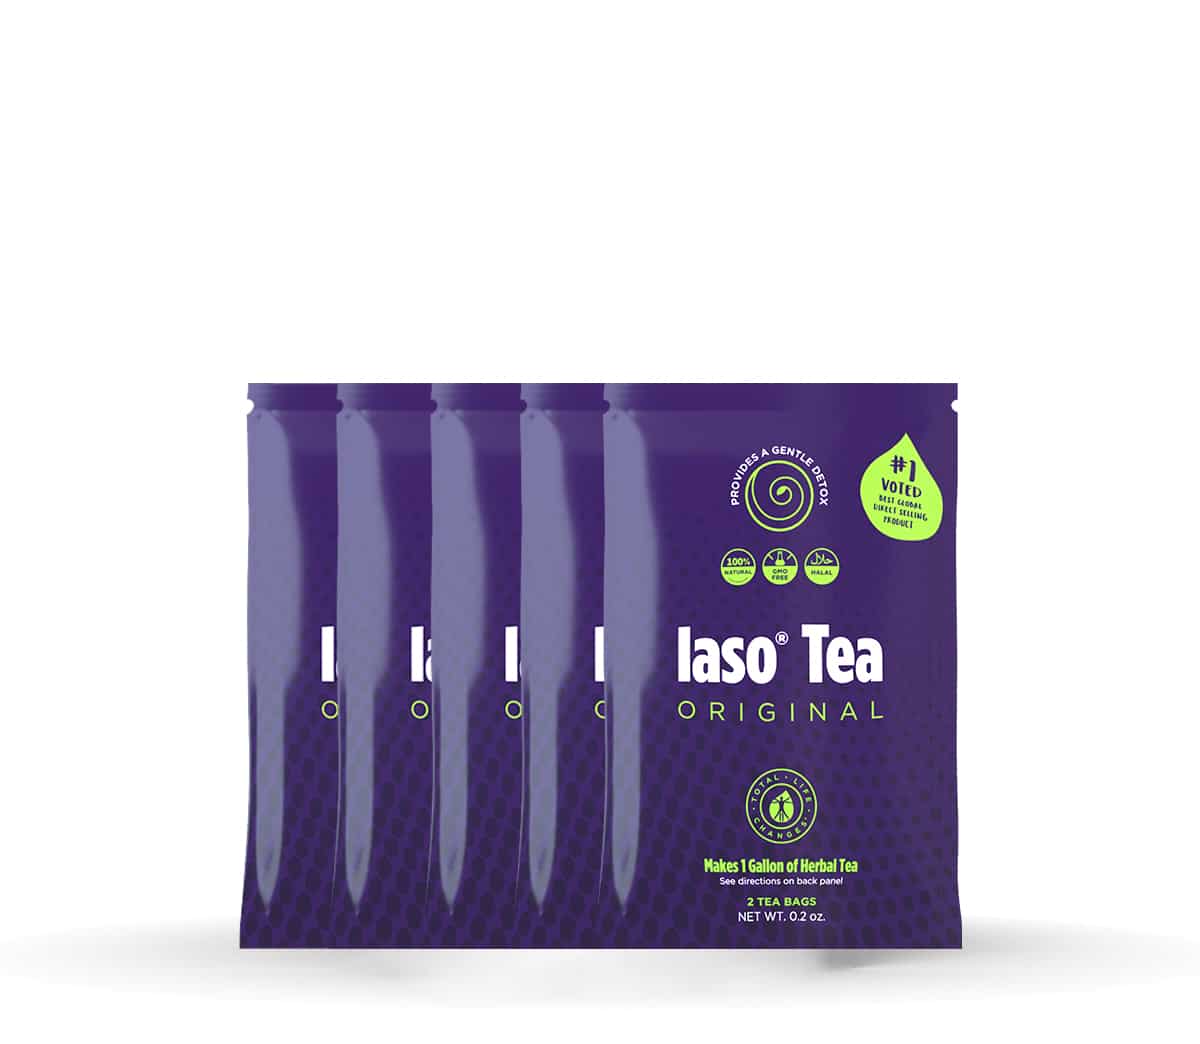 Iaso Tea Original by Total Life Changes